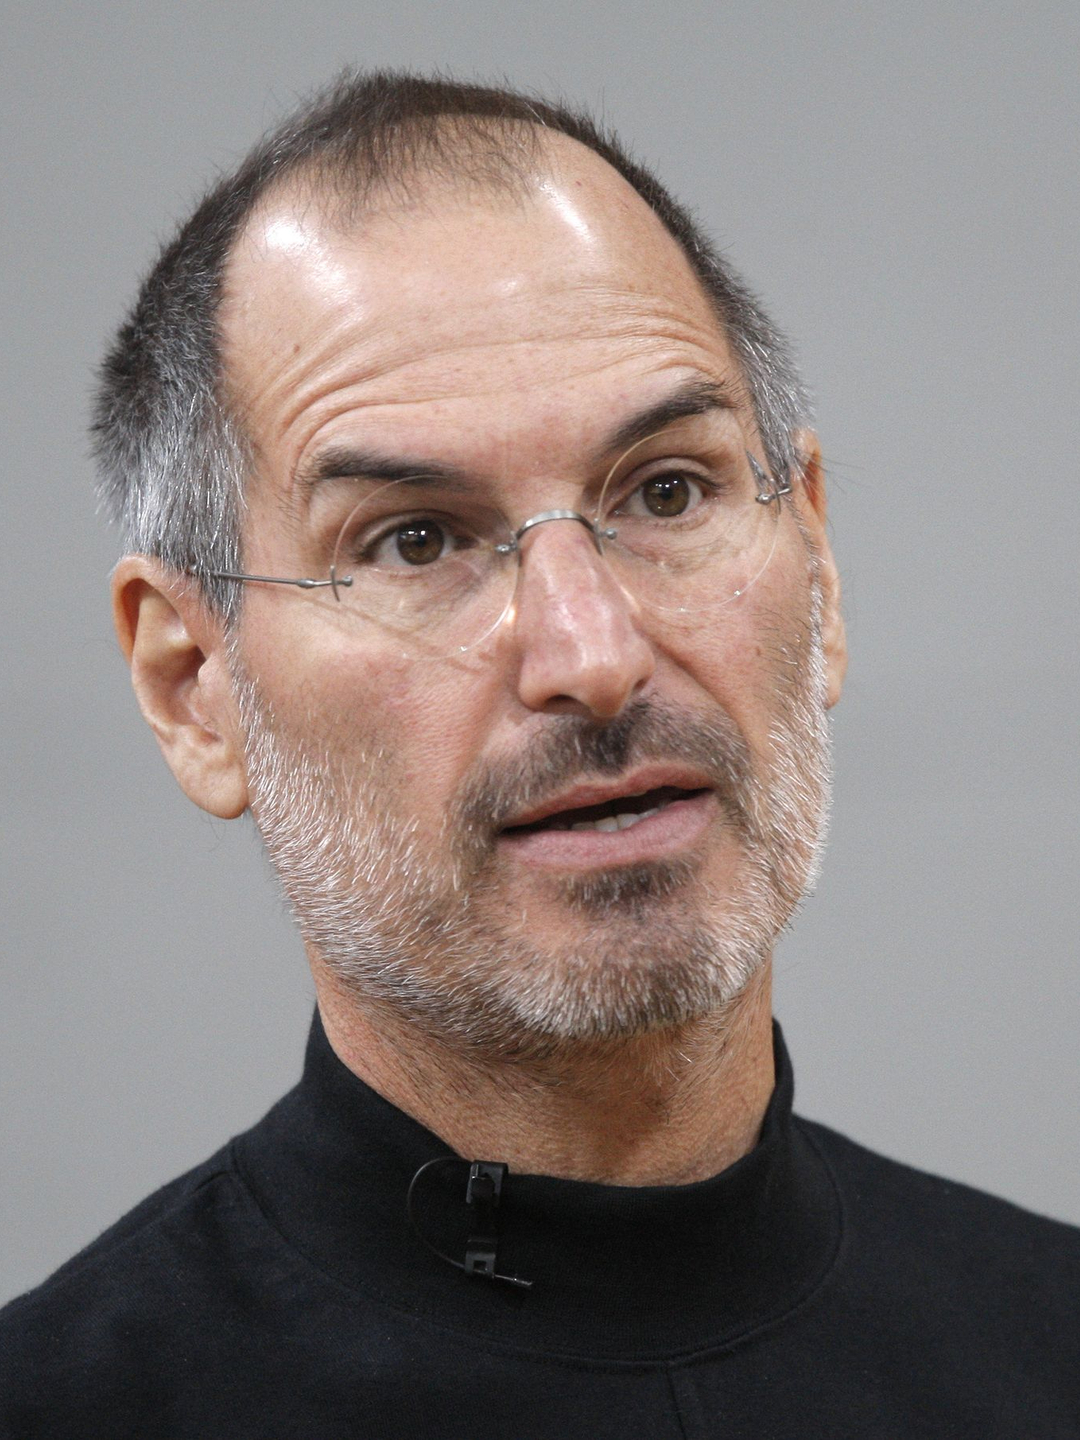 Steve Jobs death date